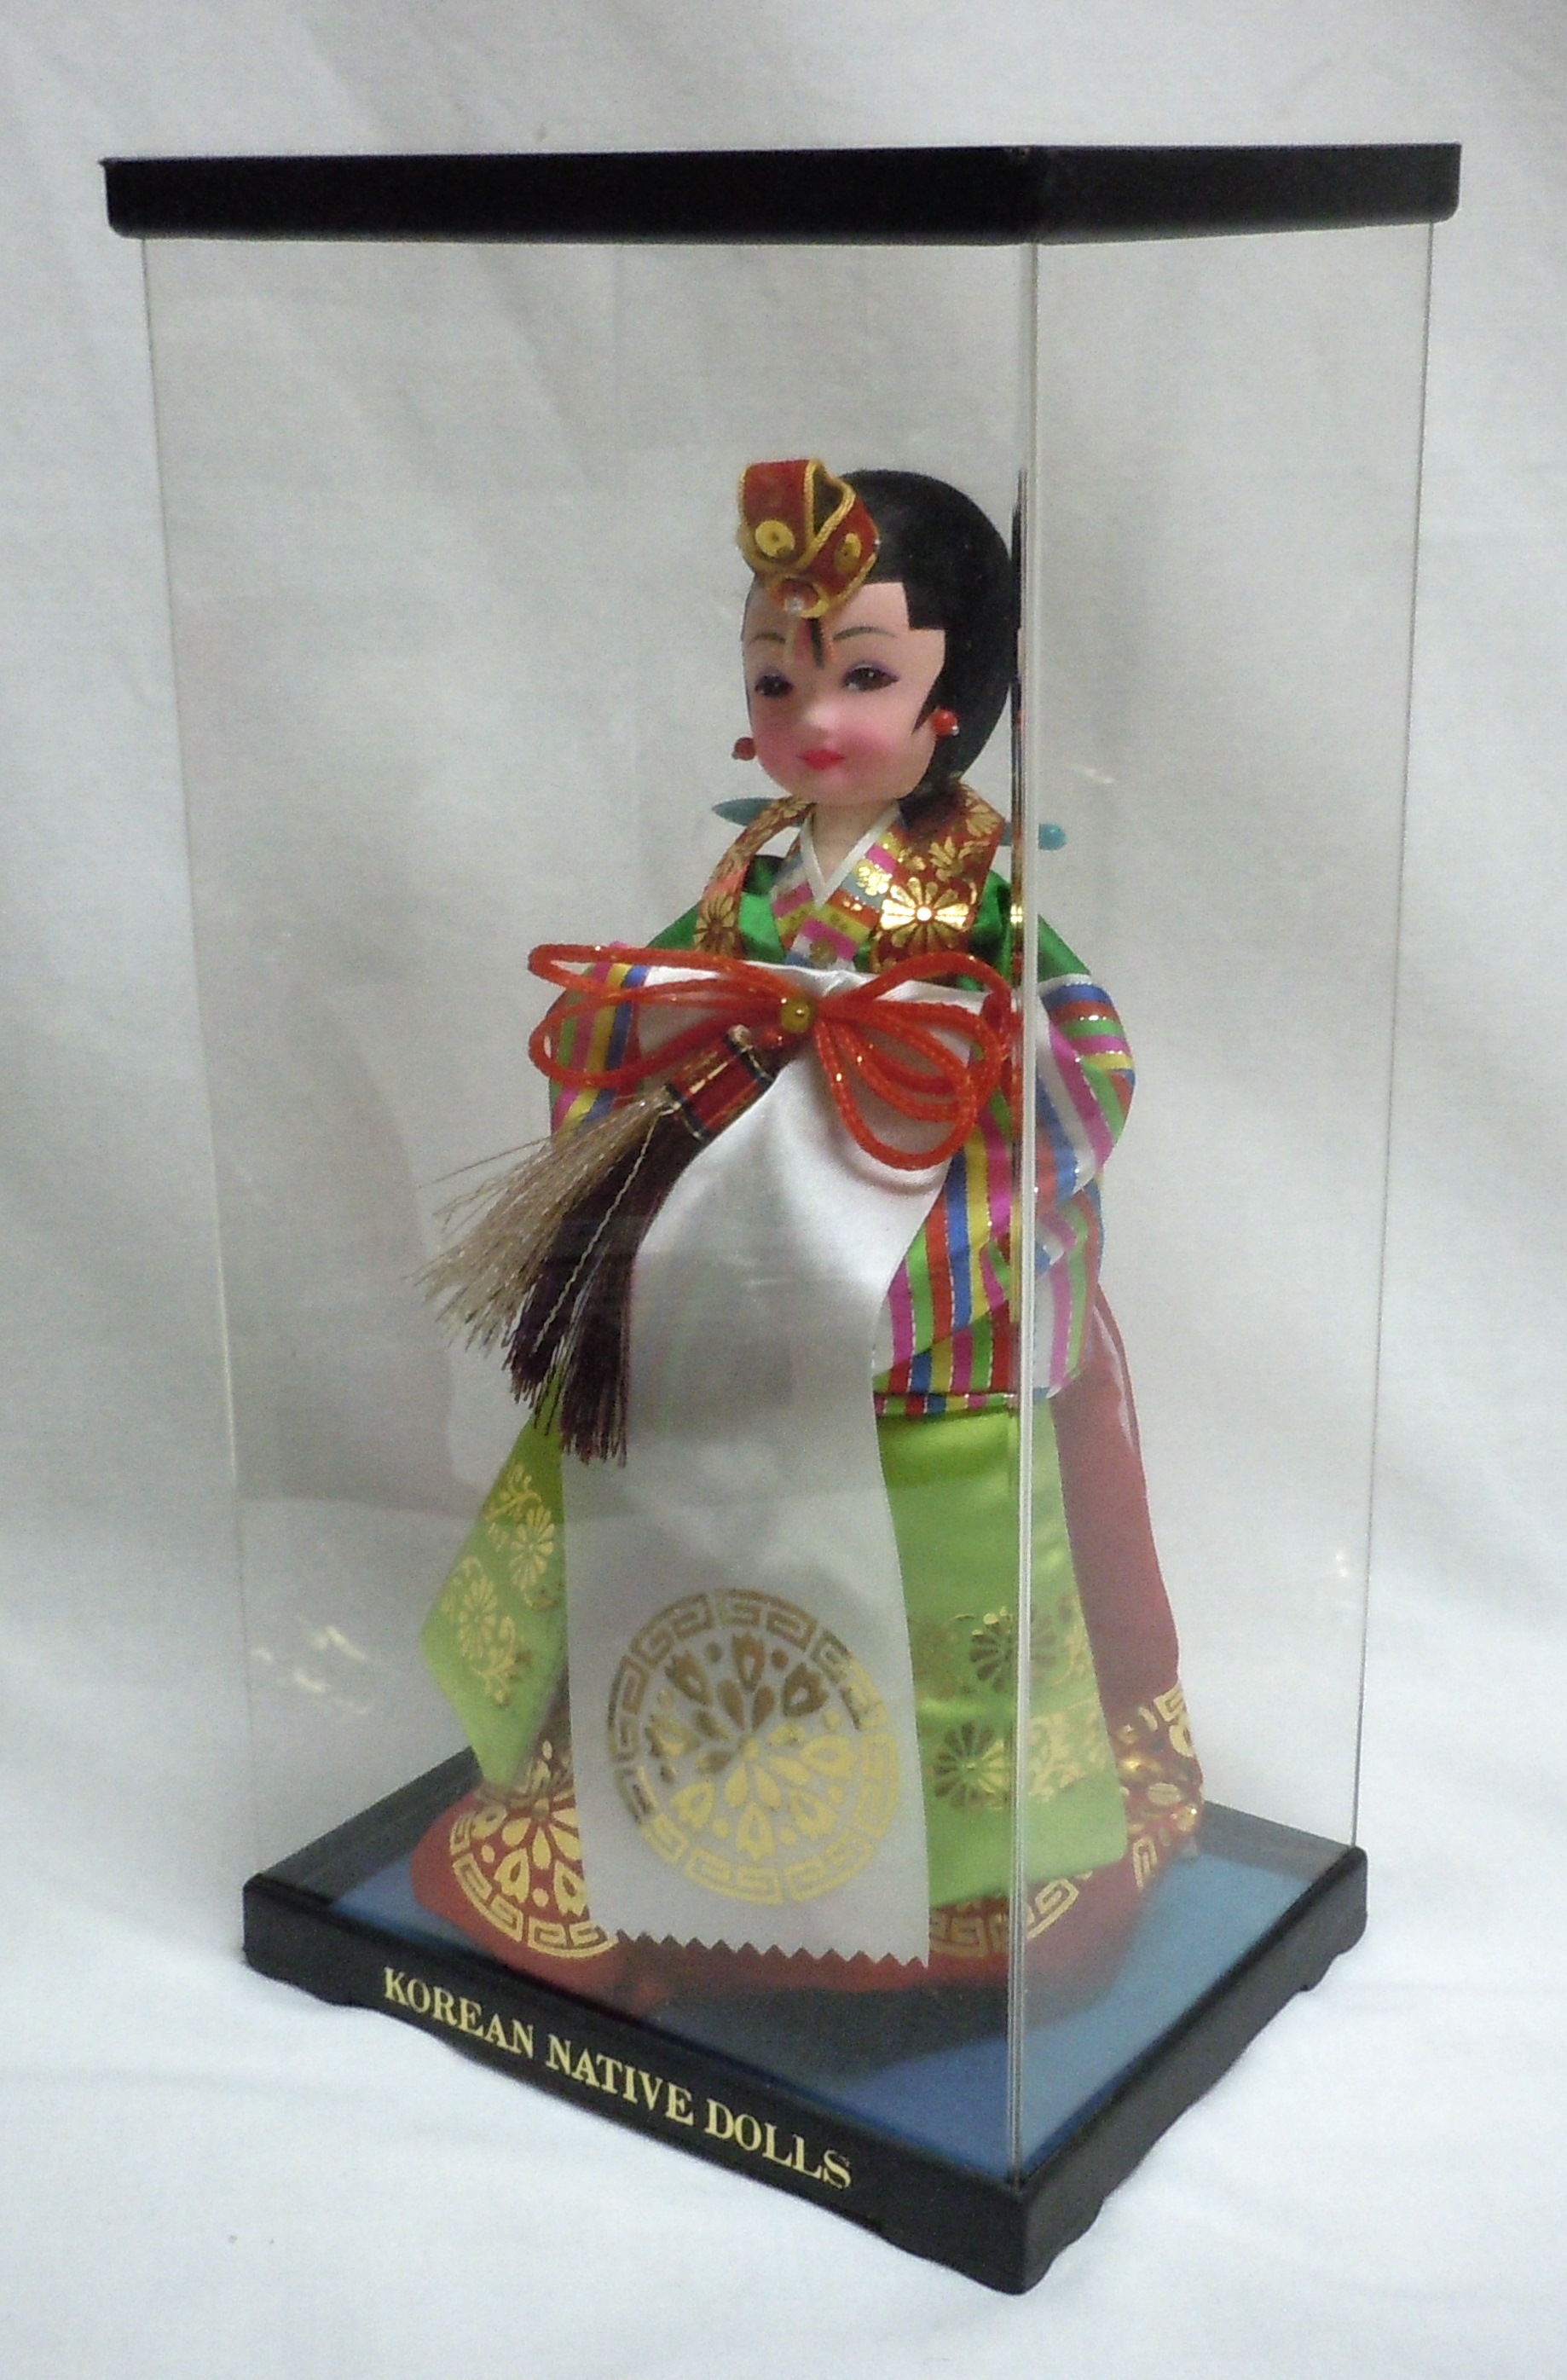 Korean Bride Wedding Doll In Case Koreana Gifts And Arts